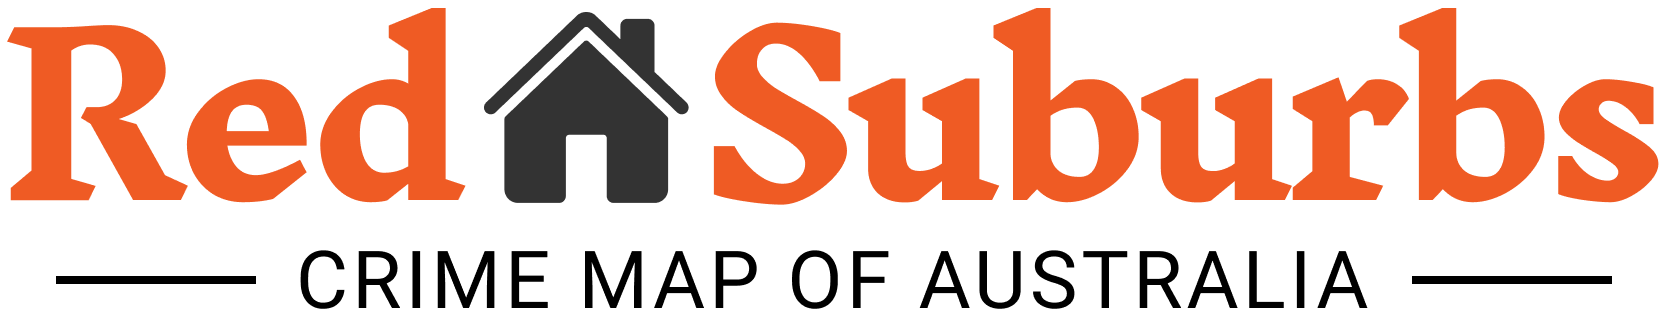 Red Suburbs logo